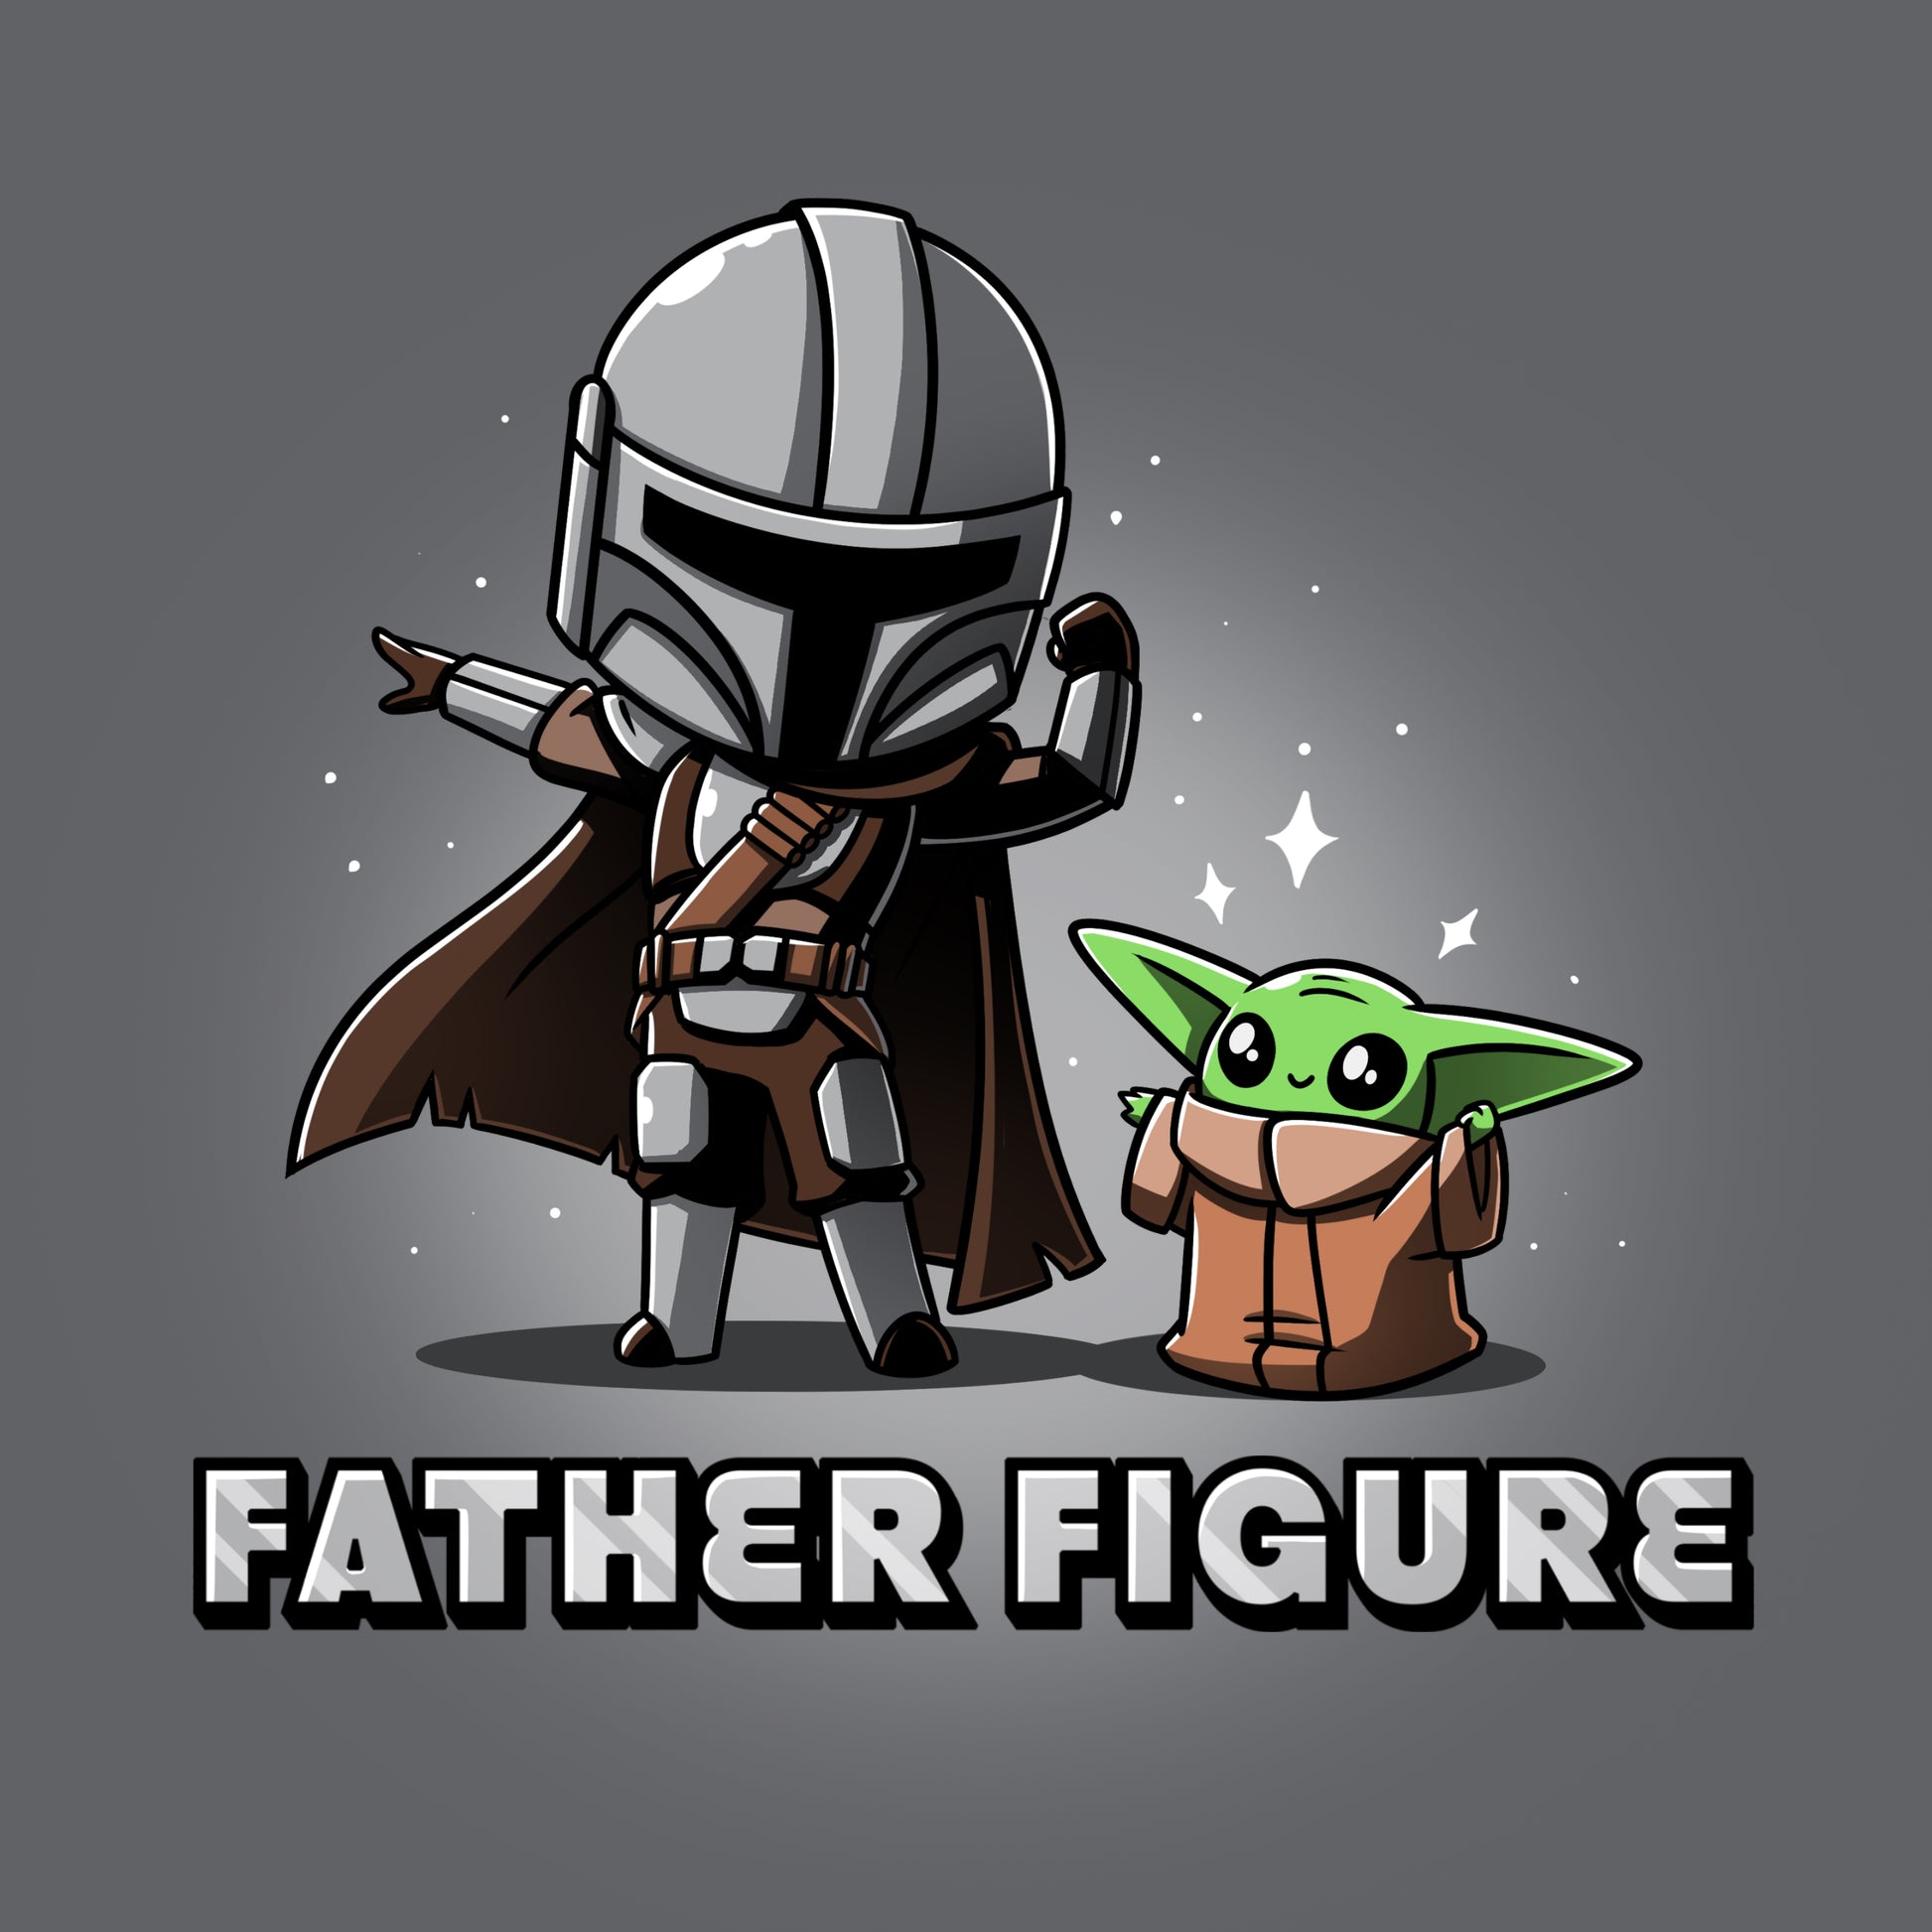 Father Figure (Mando & Grogu), Star Wars.